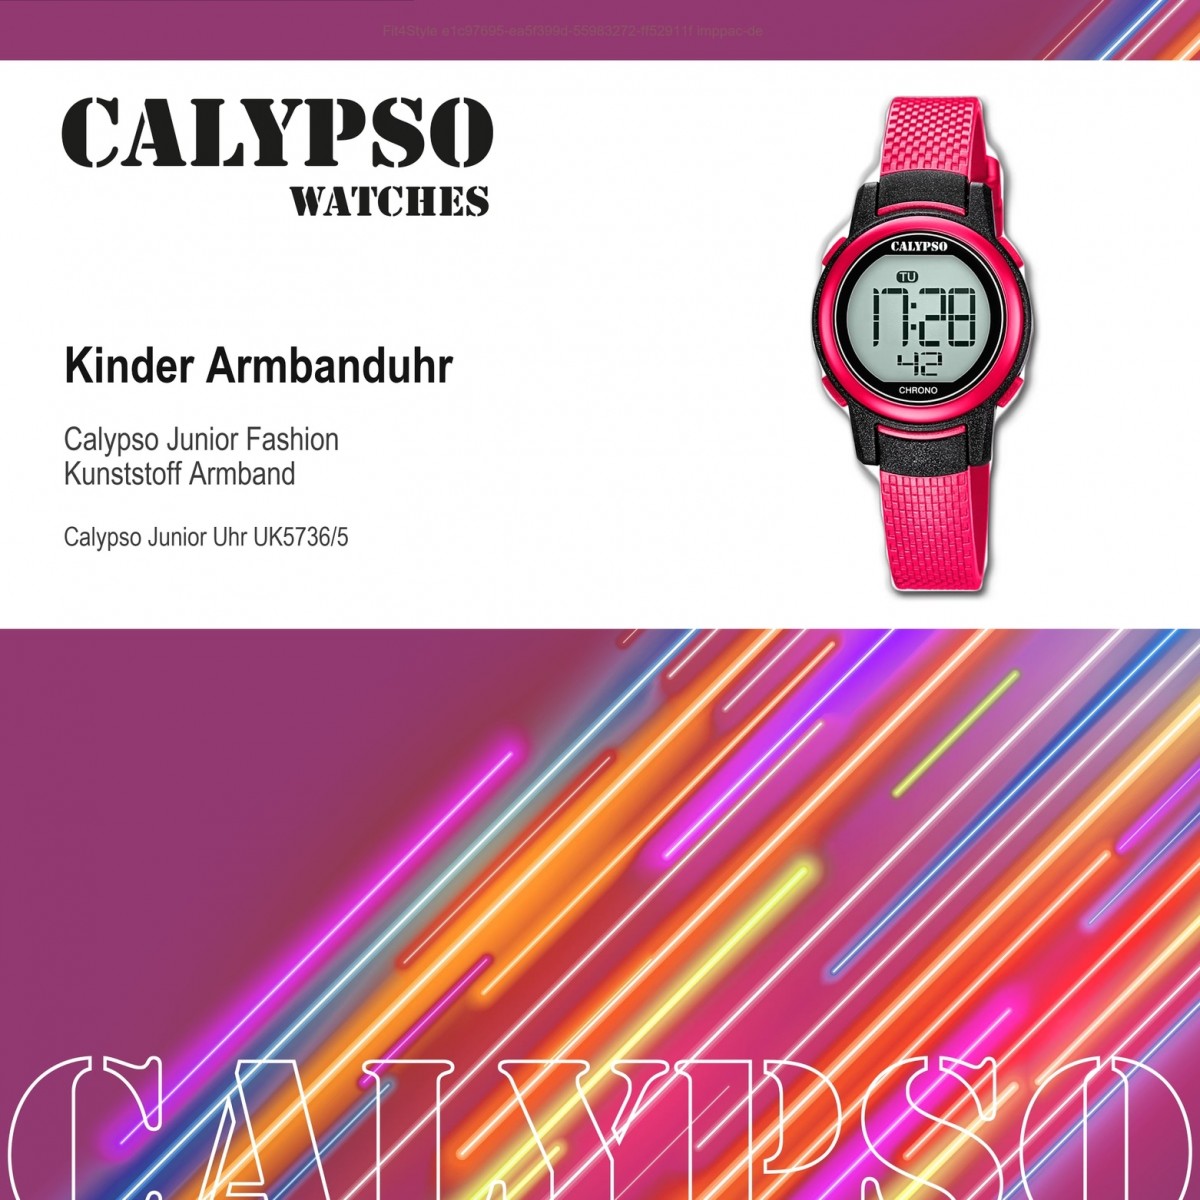 Calypso Kinder Armbanduhr Digital pink PU Quarz-Uhr K5736/5 UK5736/5 Crush